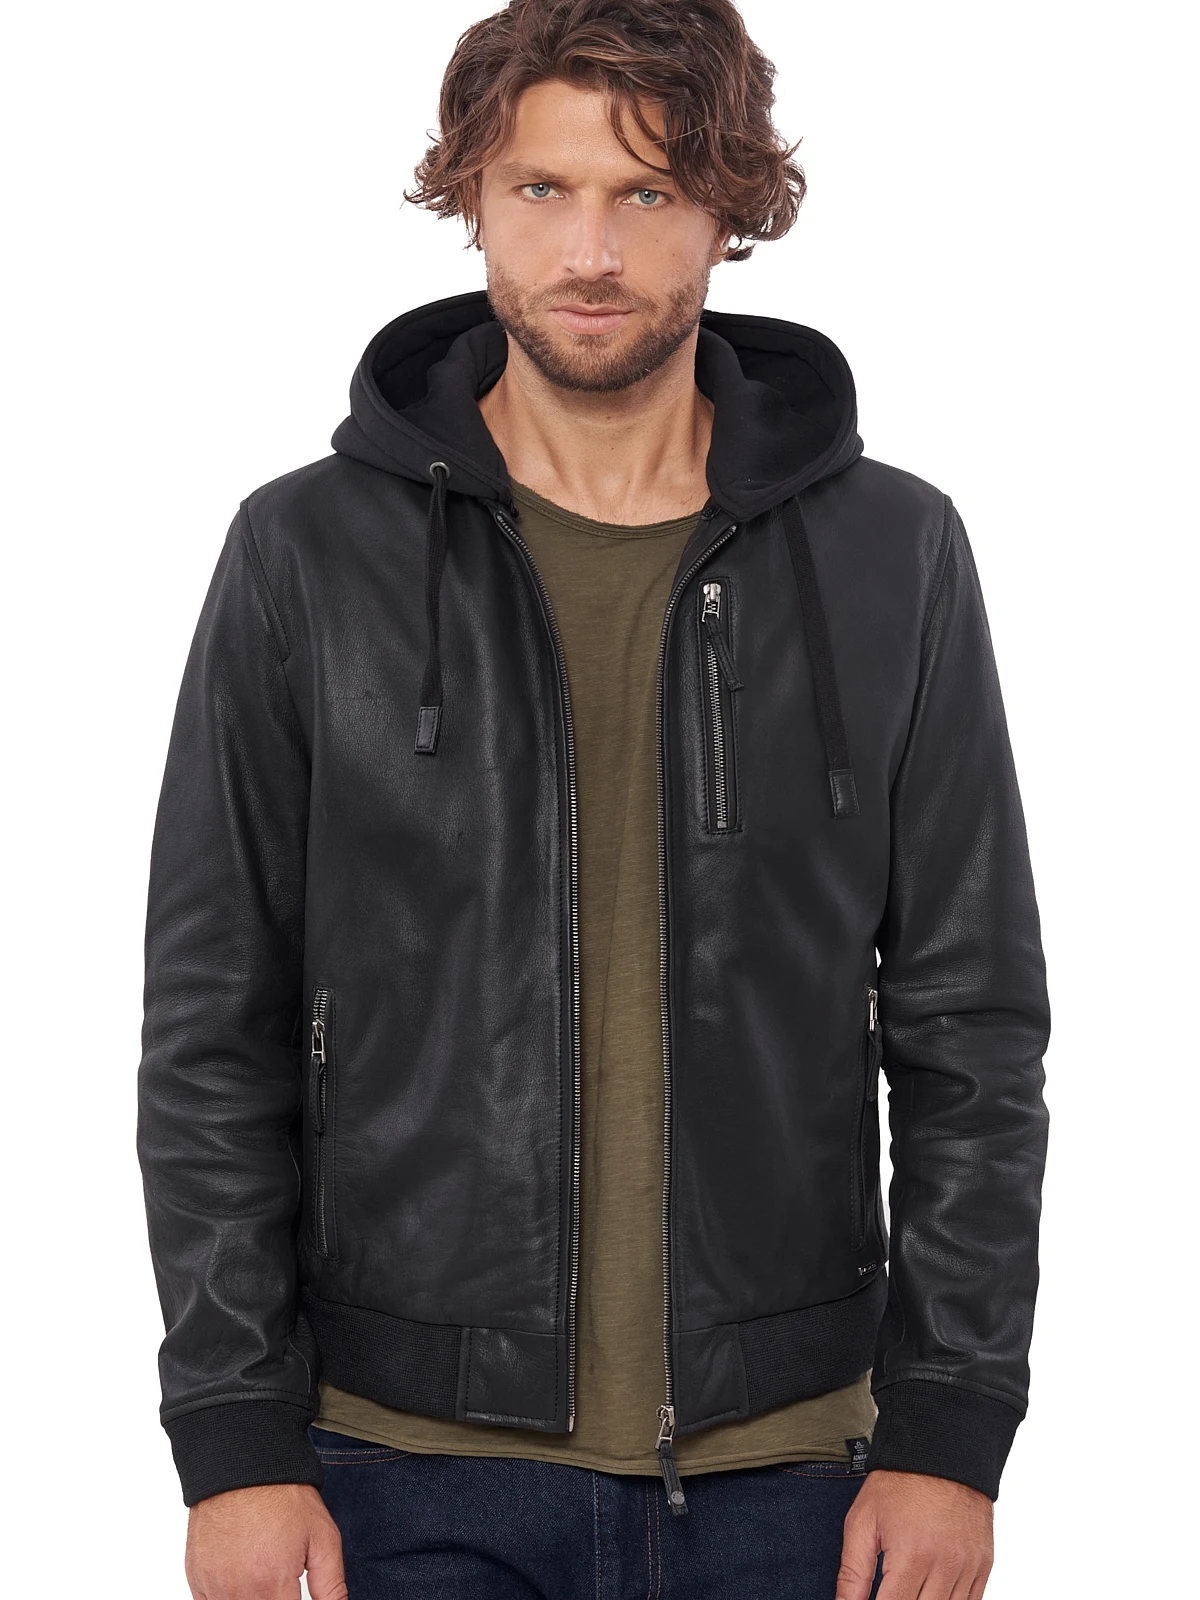 VAINAS European Brand Mens Premium Buffalo Leather jacket for men Winter Real  leather Motorcycle jackets Biker jackets Sugar